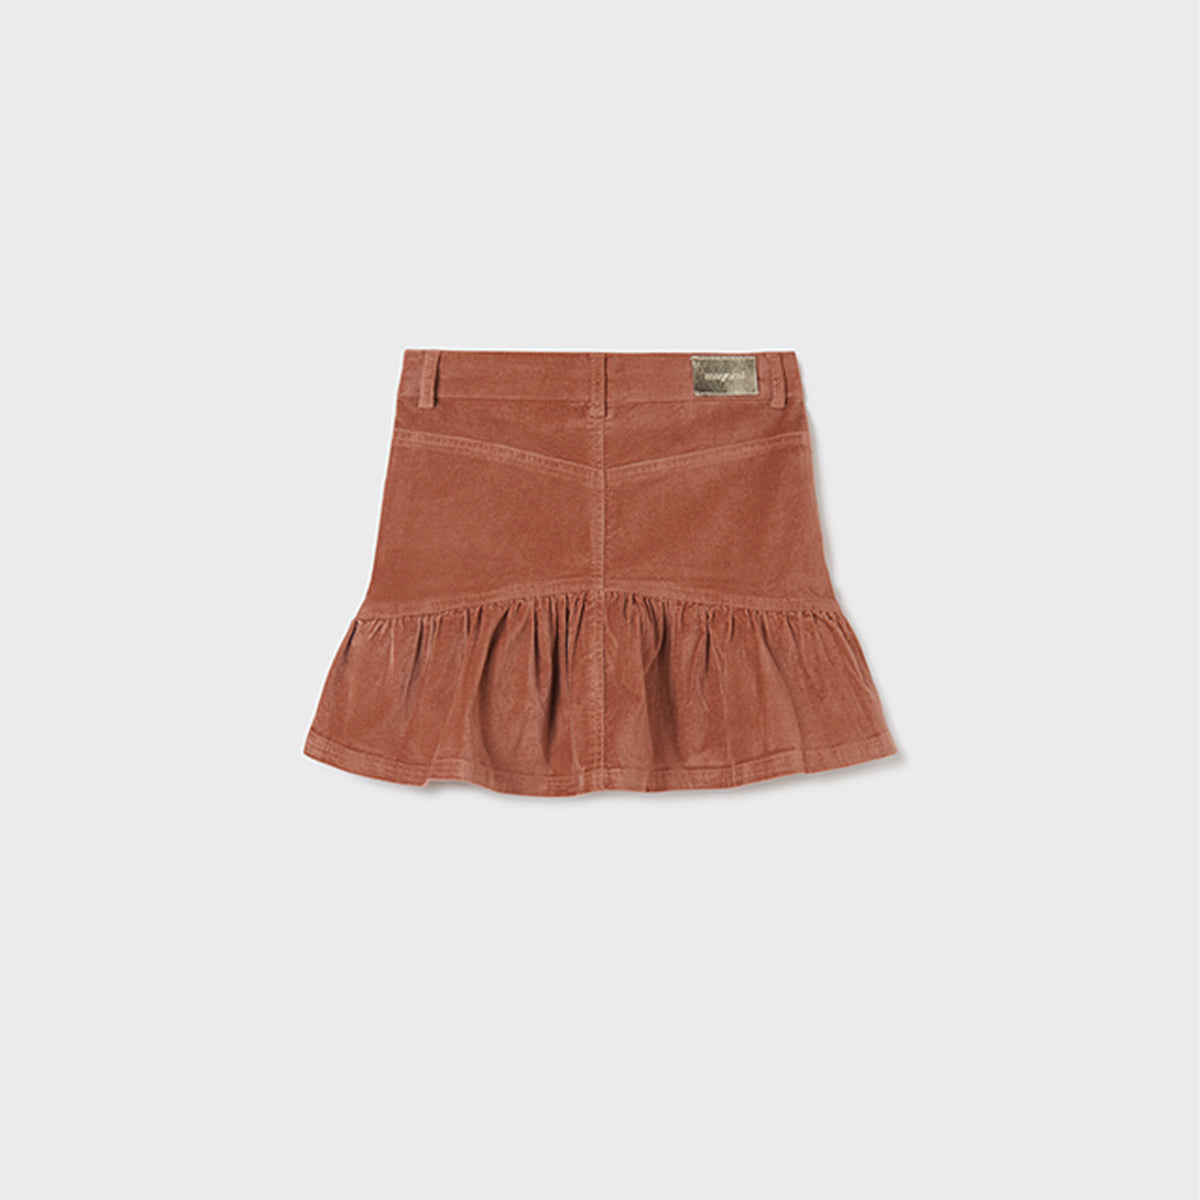 Nude Peach Corduroy Skirt